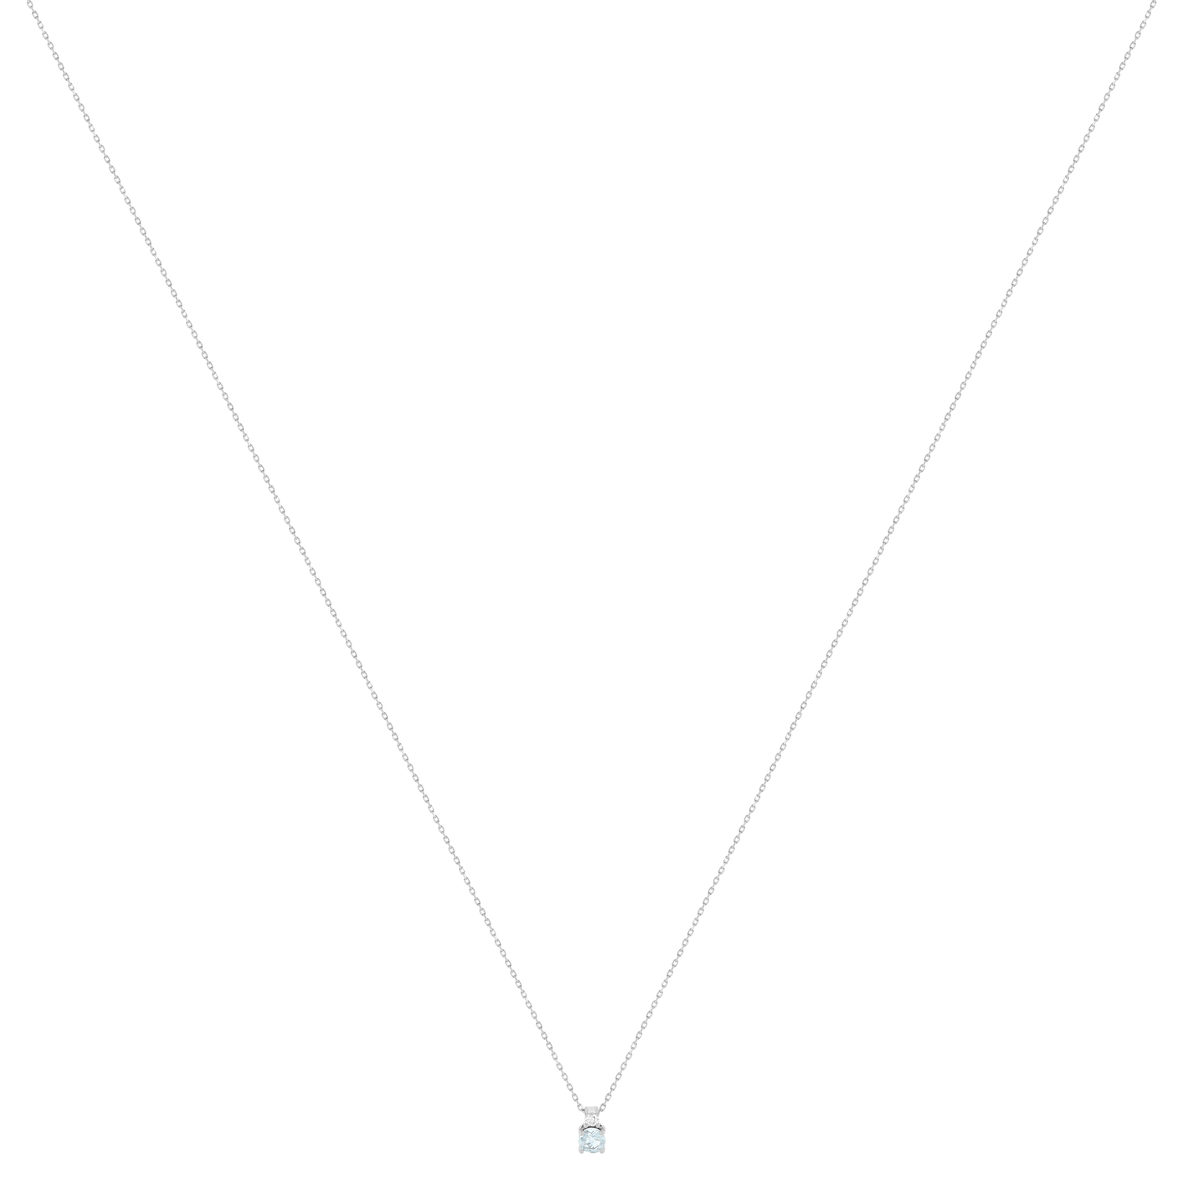 Collier or 375 blanc aigue-marine zirconia, 45 cm - vue 2